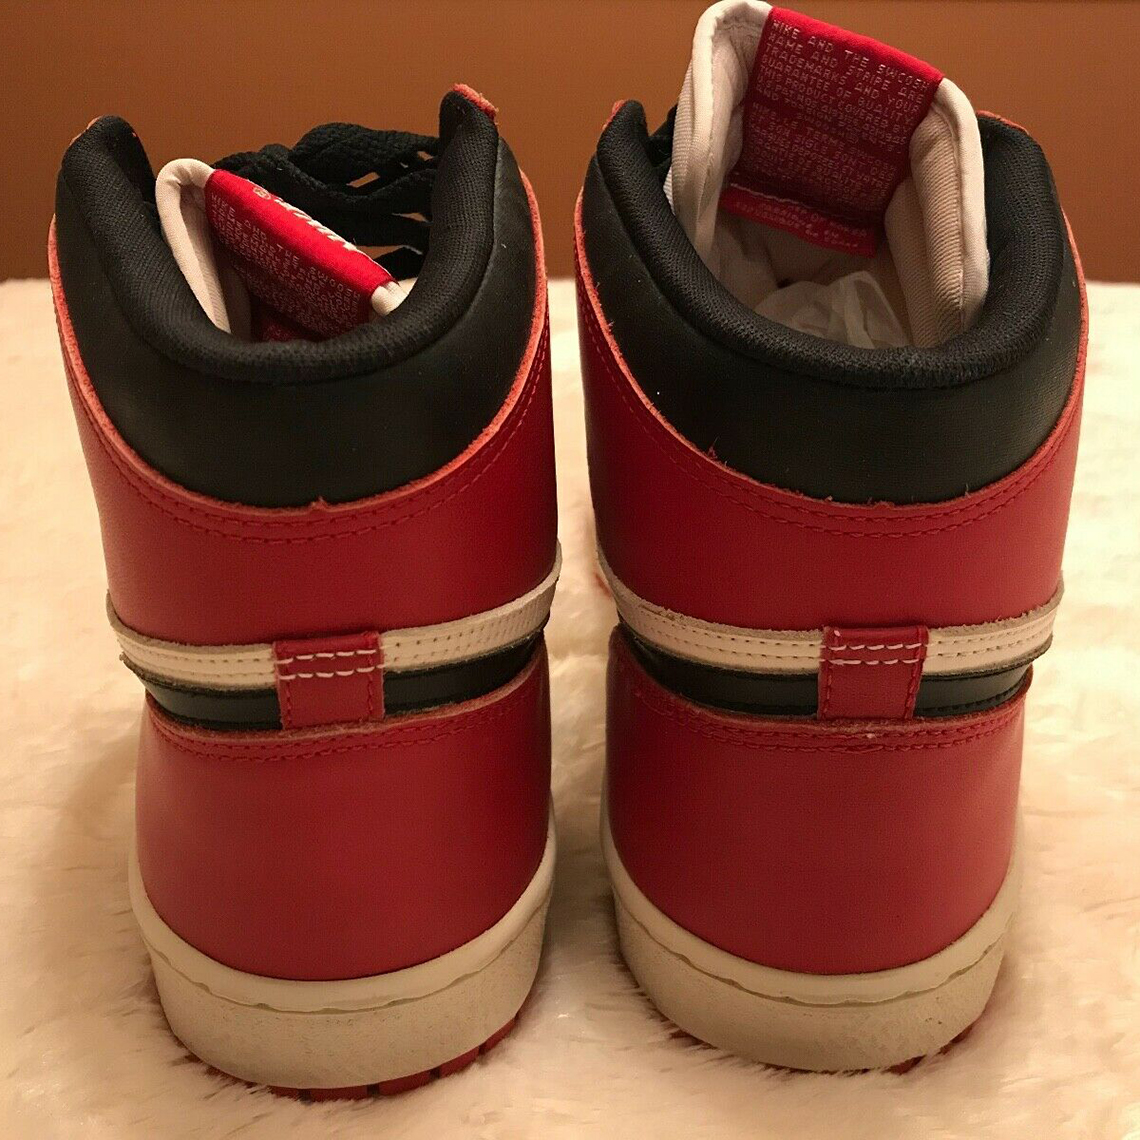 OG Unworn Autographed Air Jordan 1 Chicago Auction | SneakerNews.com